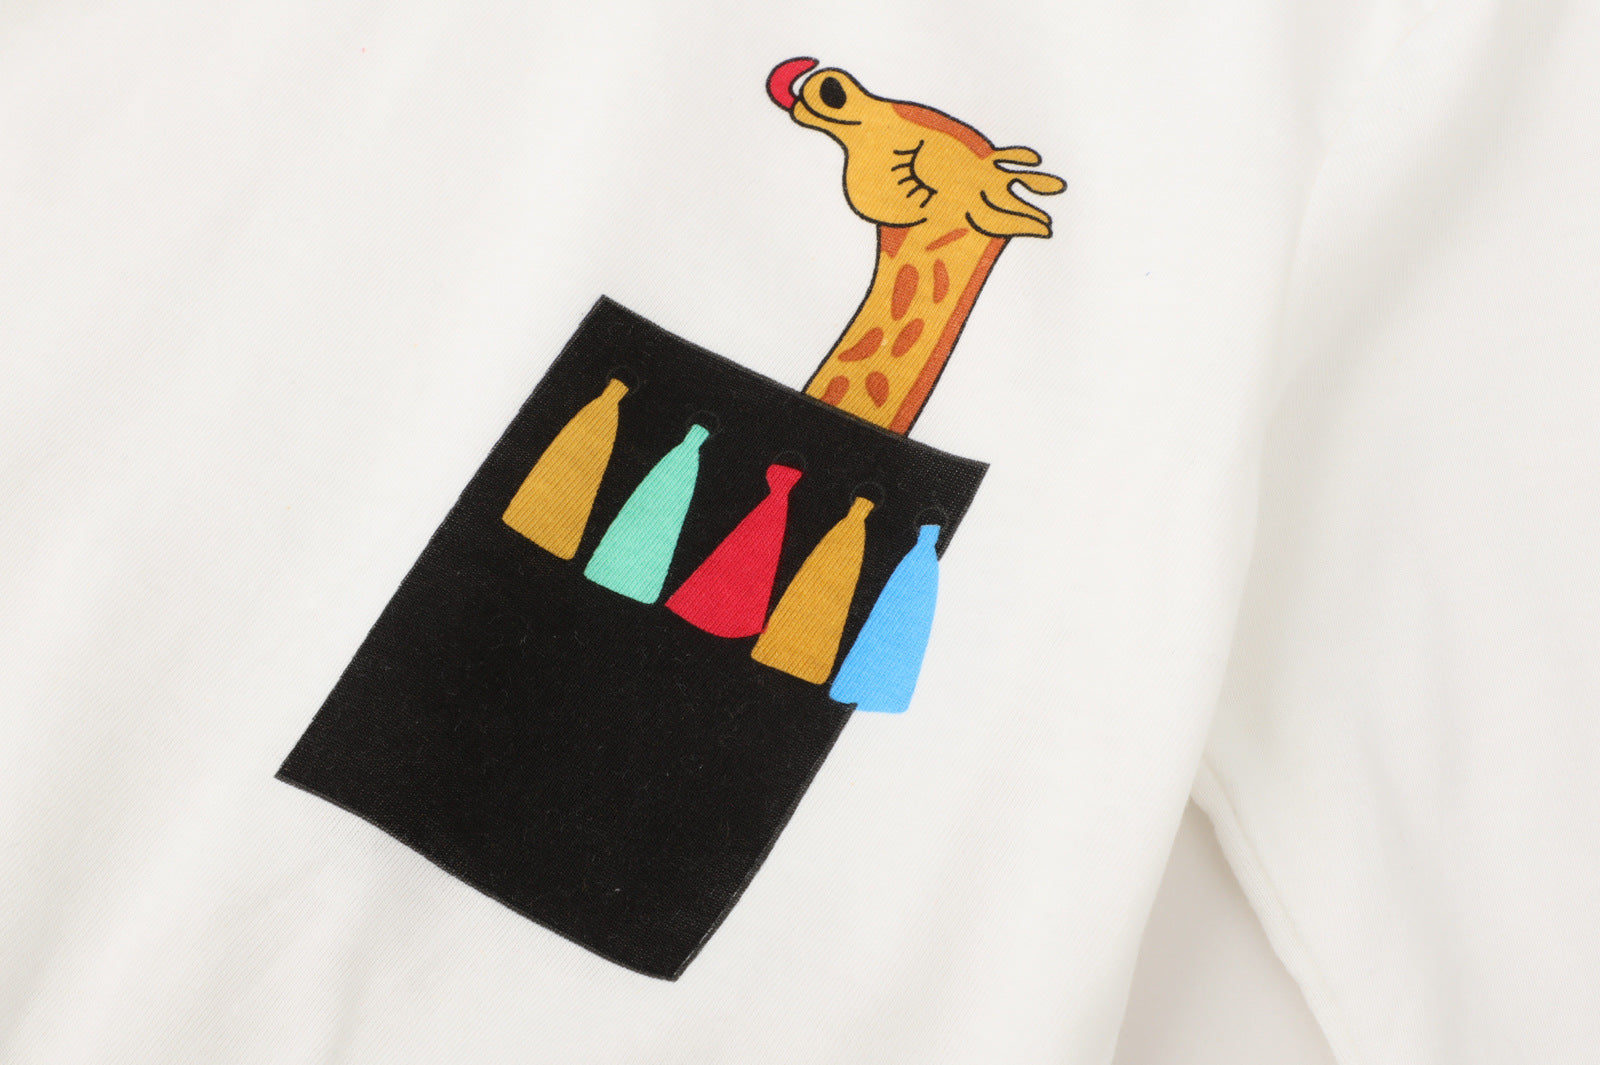 Toddler Giraffe Print Tops & Pants Lounge Set